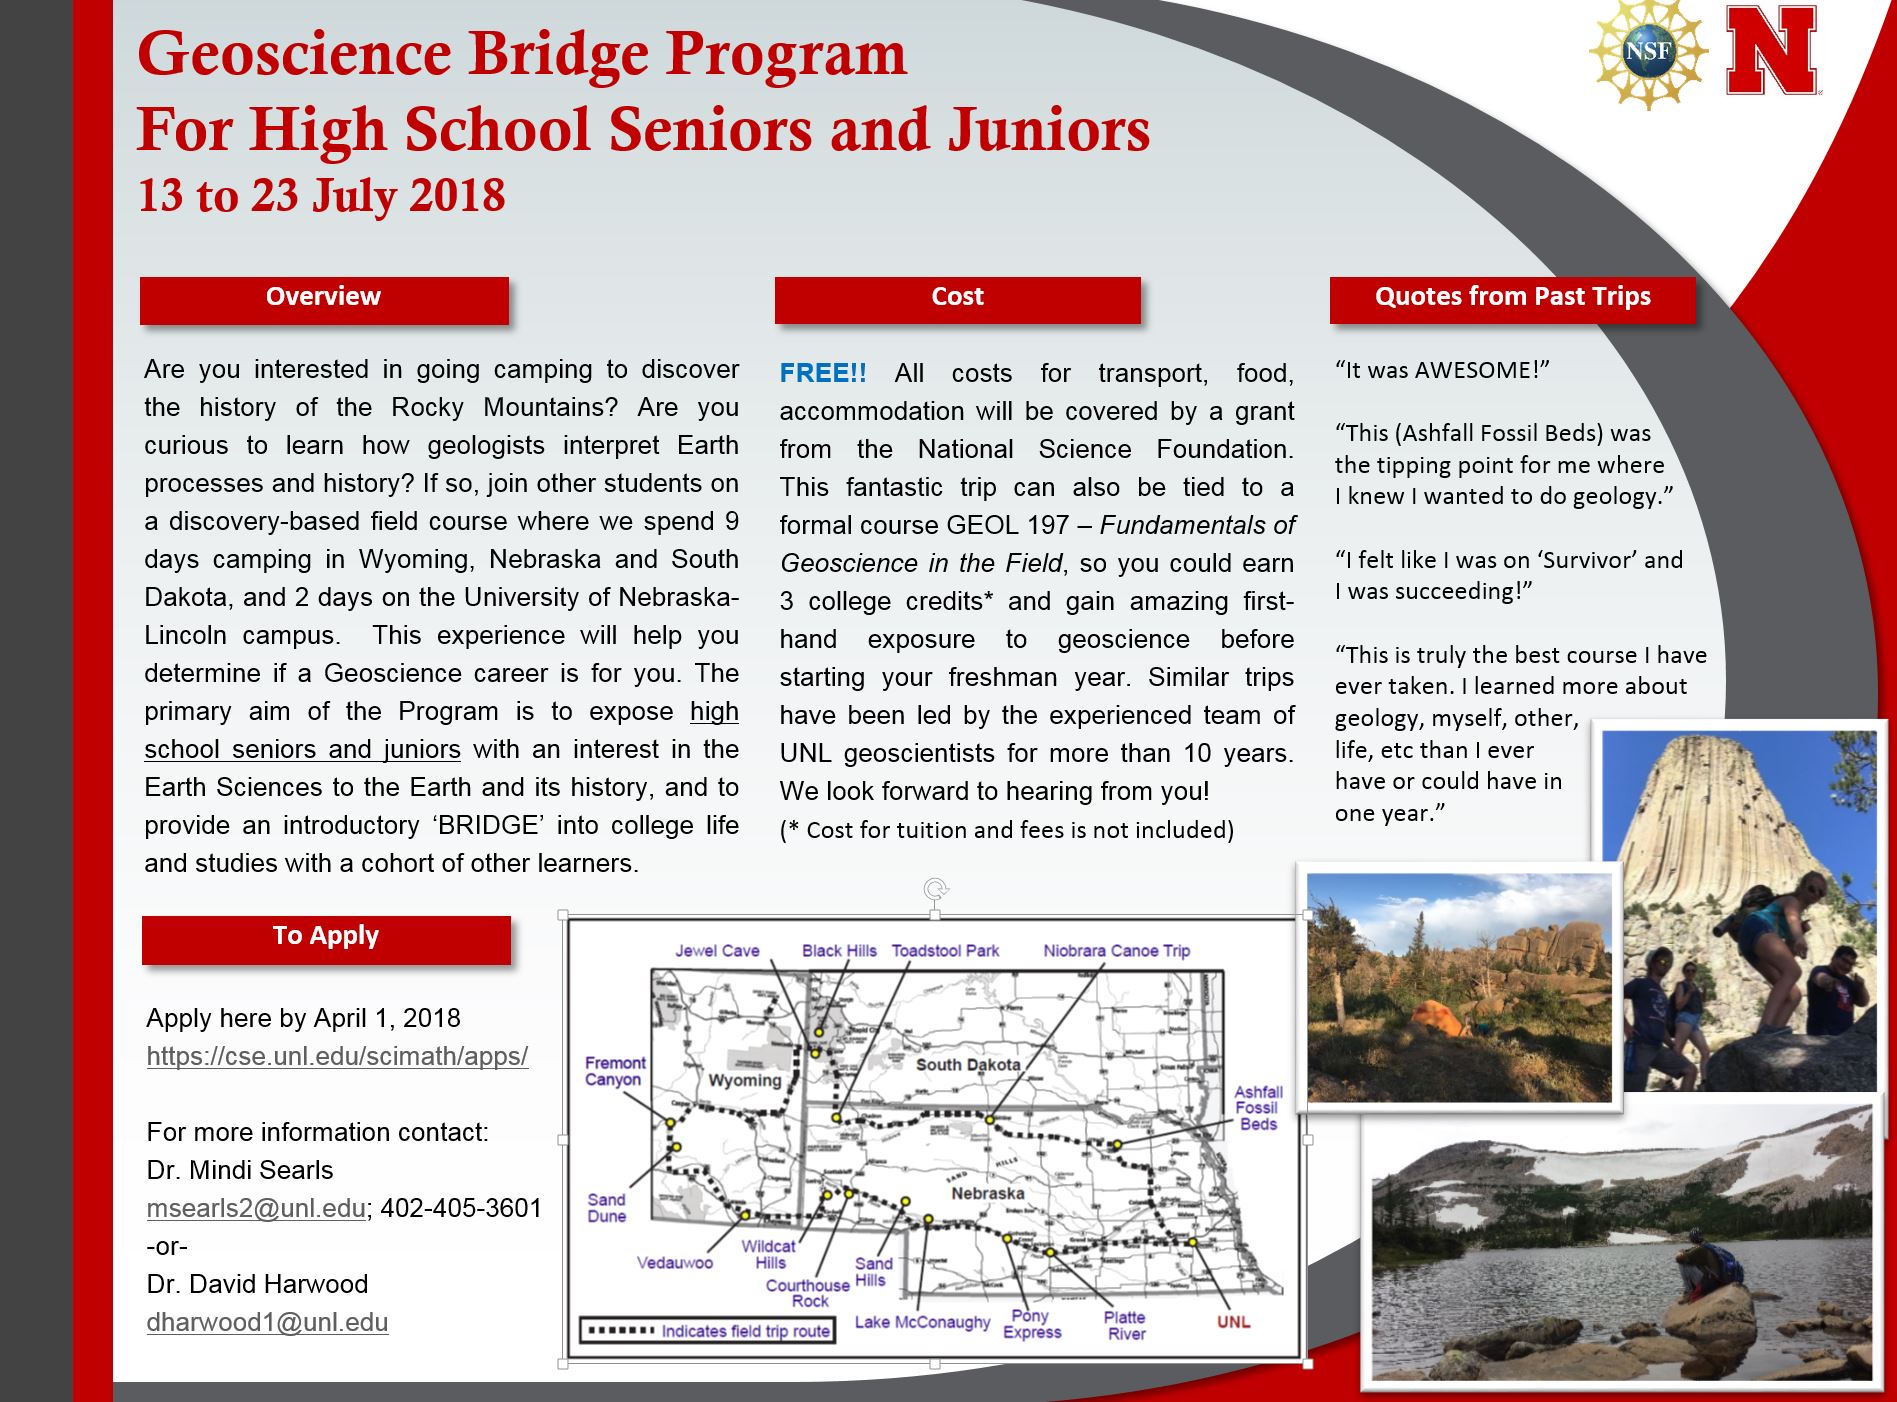 Geoscience Bridge Program flyer